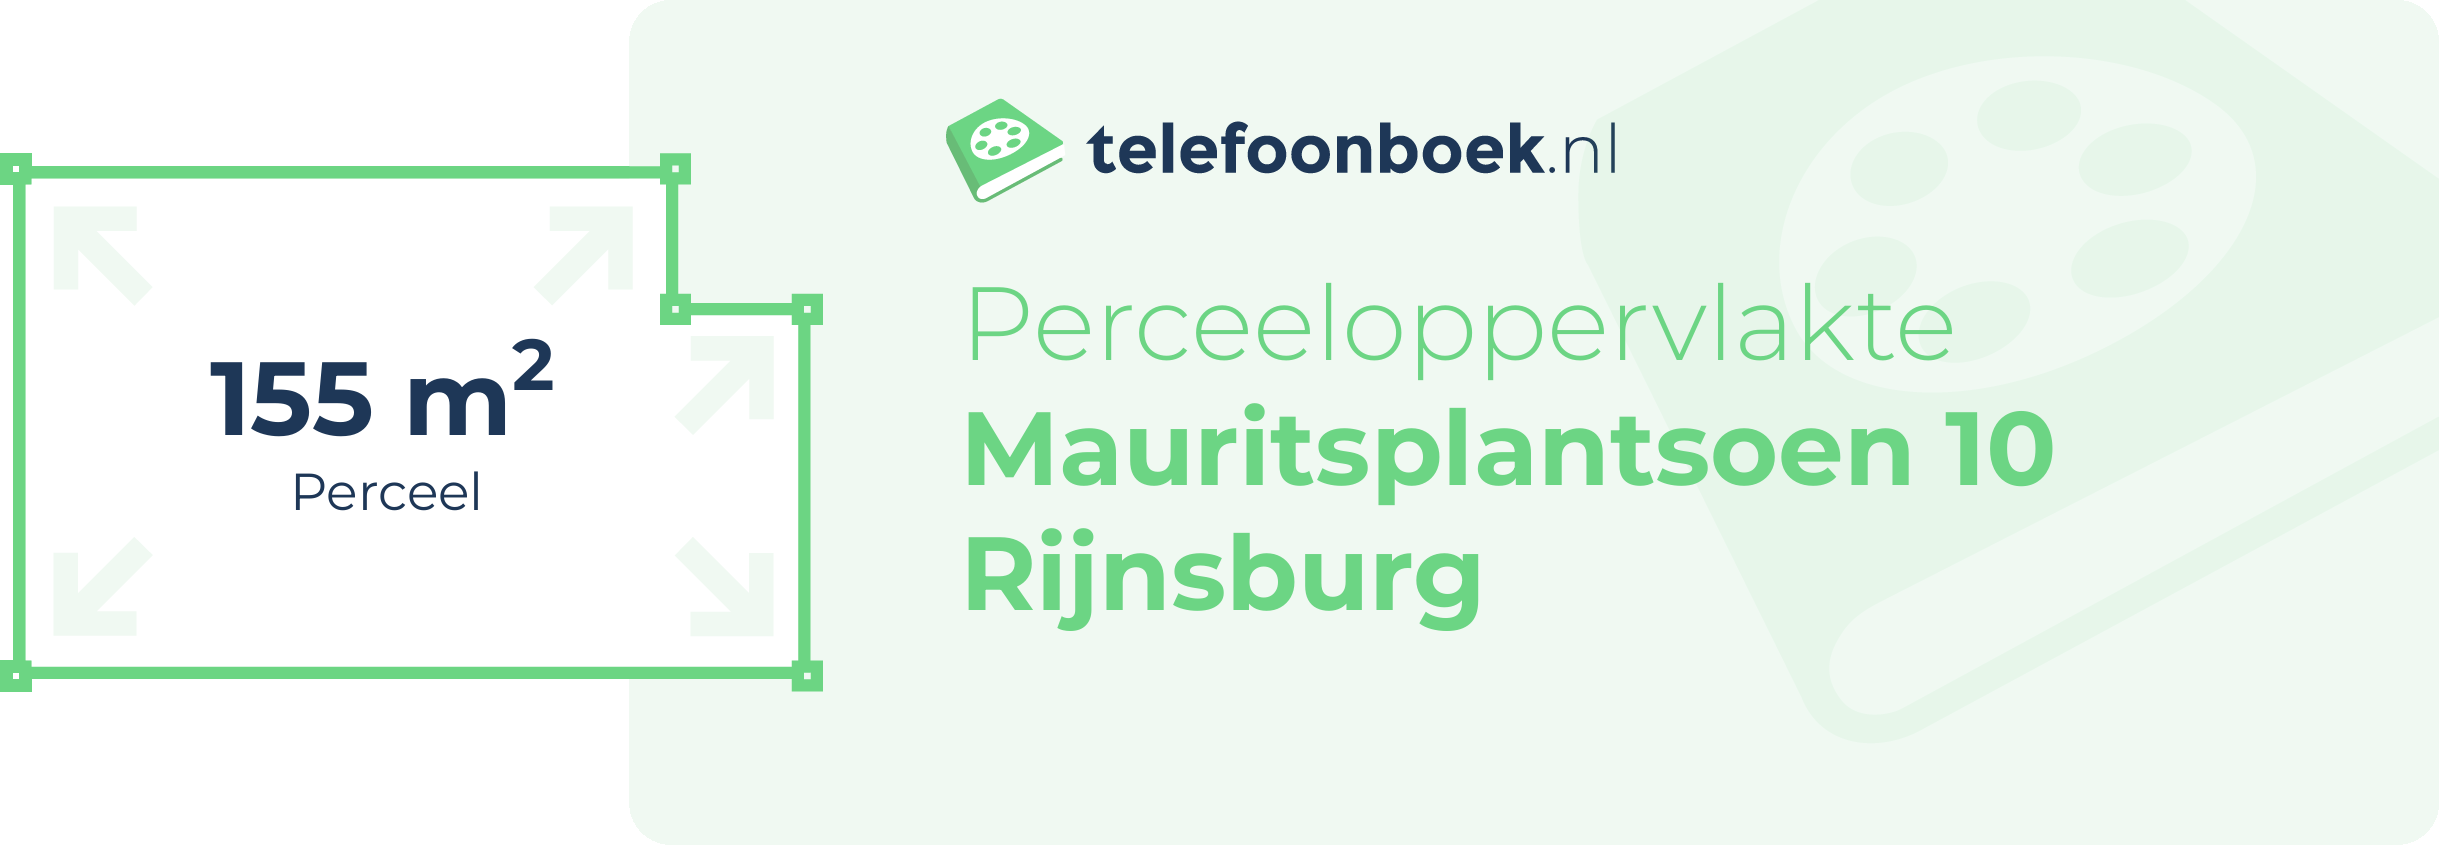 Perceeloppervlakte Mauritsplantsoen 10 Rijnsburg